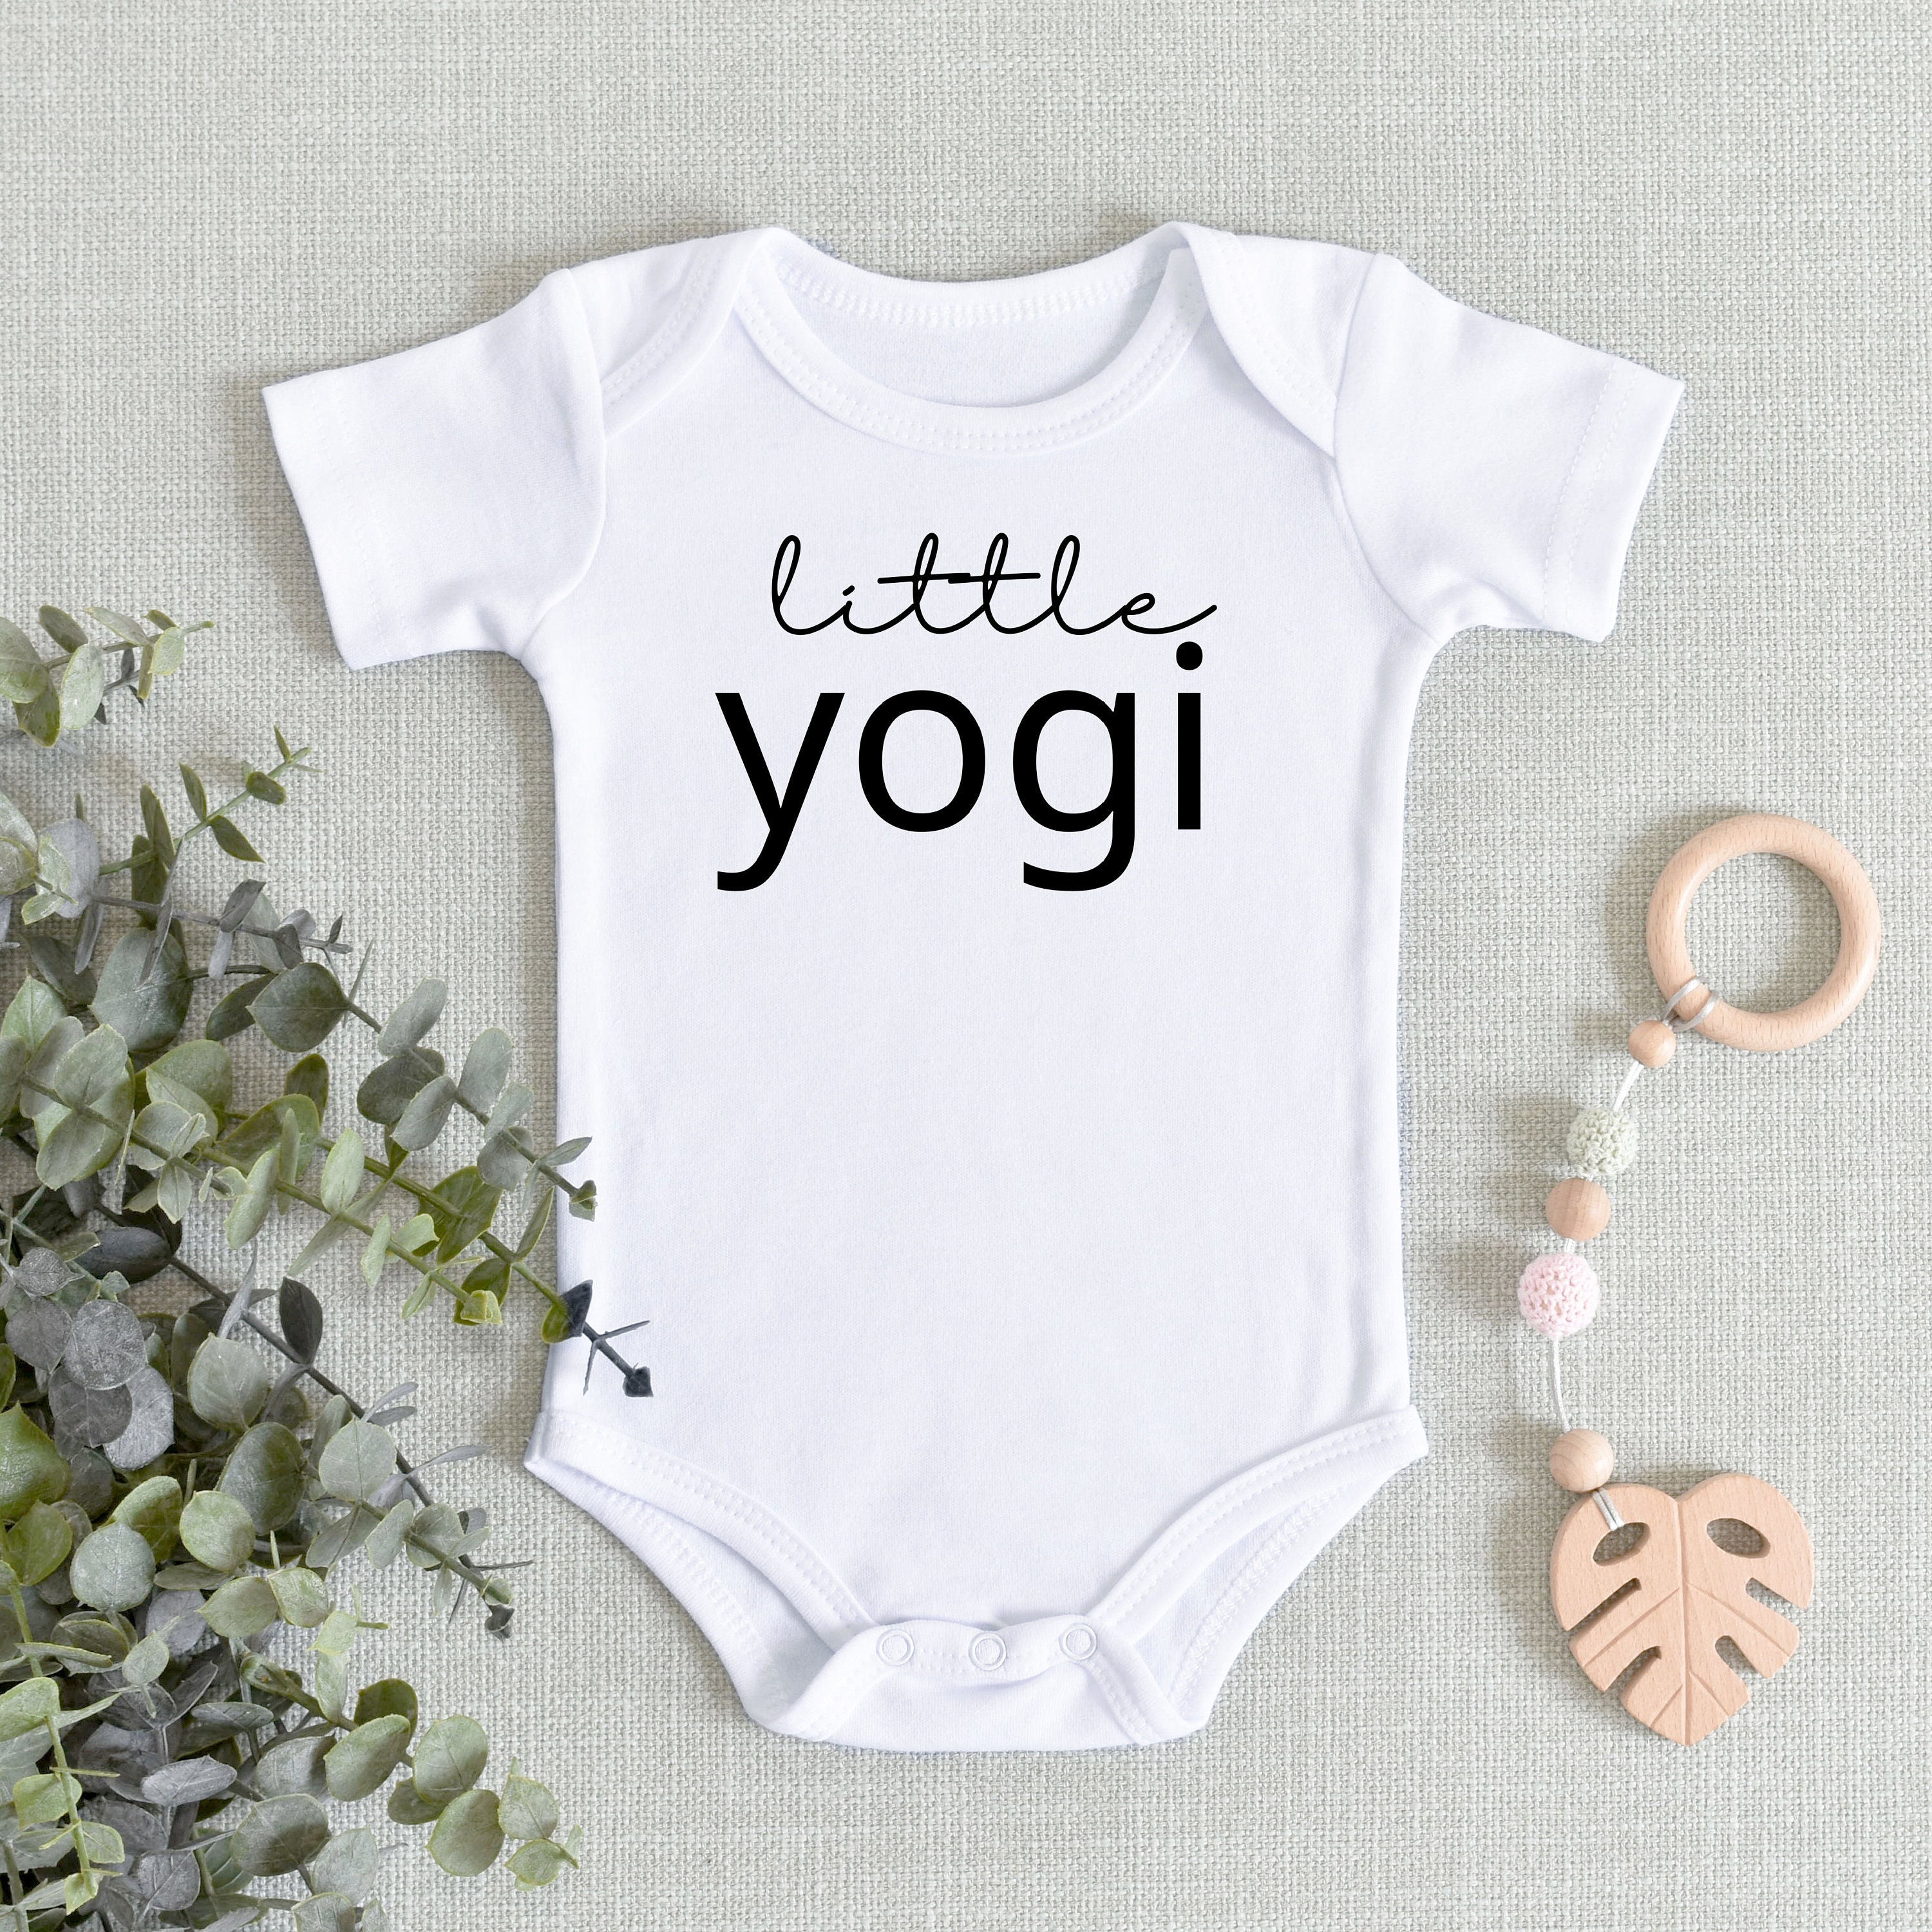 Little Yogi, Baby Yoga Shirt, Yoga Baby Clothes, Baby Shower Gift